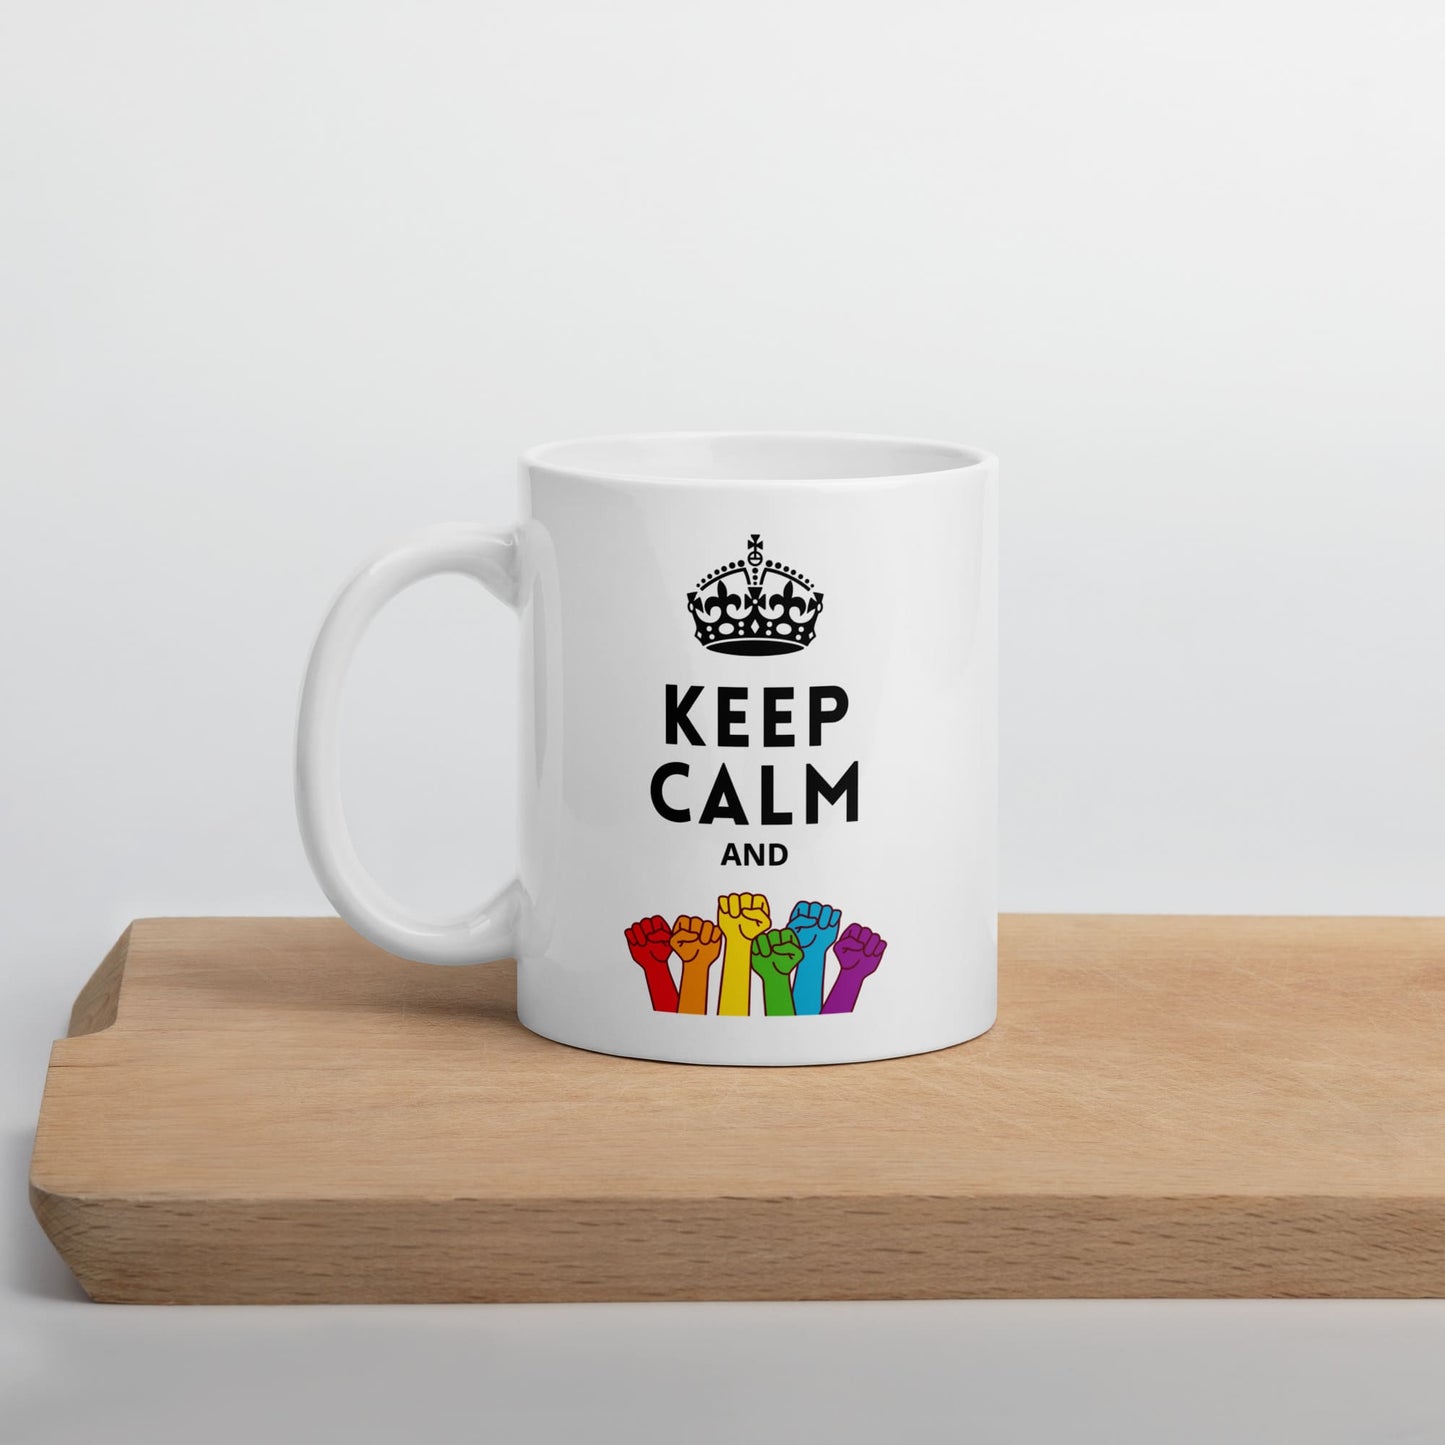 pride mug, fight LGBTQ rights coffee or tea cup on table